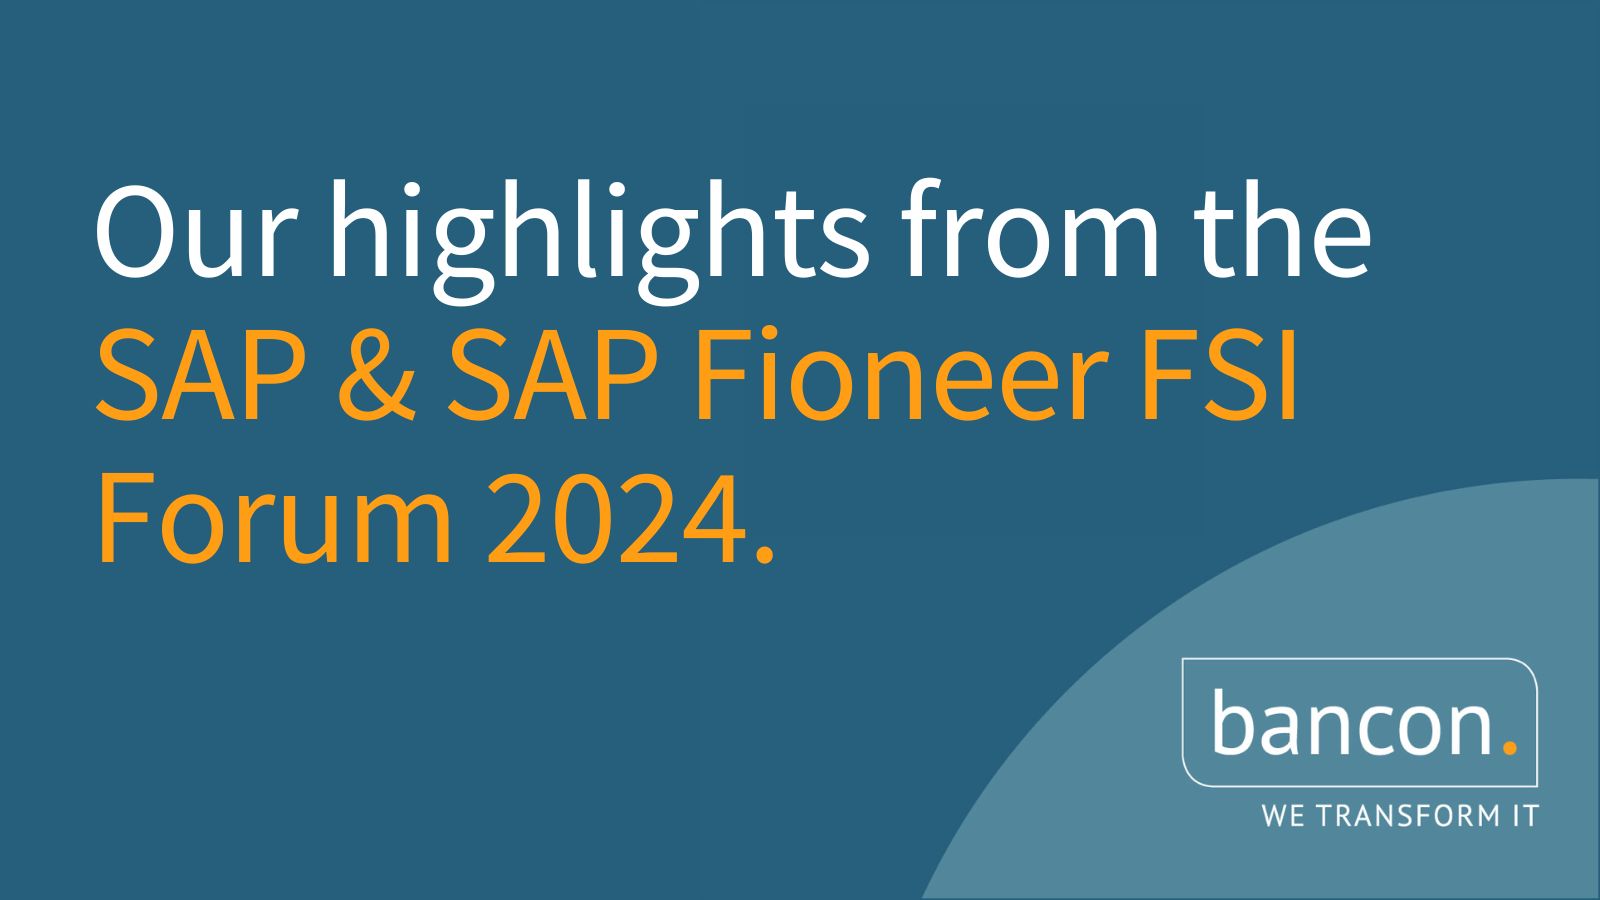 Highlights from the SAP & SAP Fioneer FSI Forum 2024 